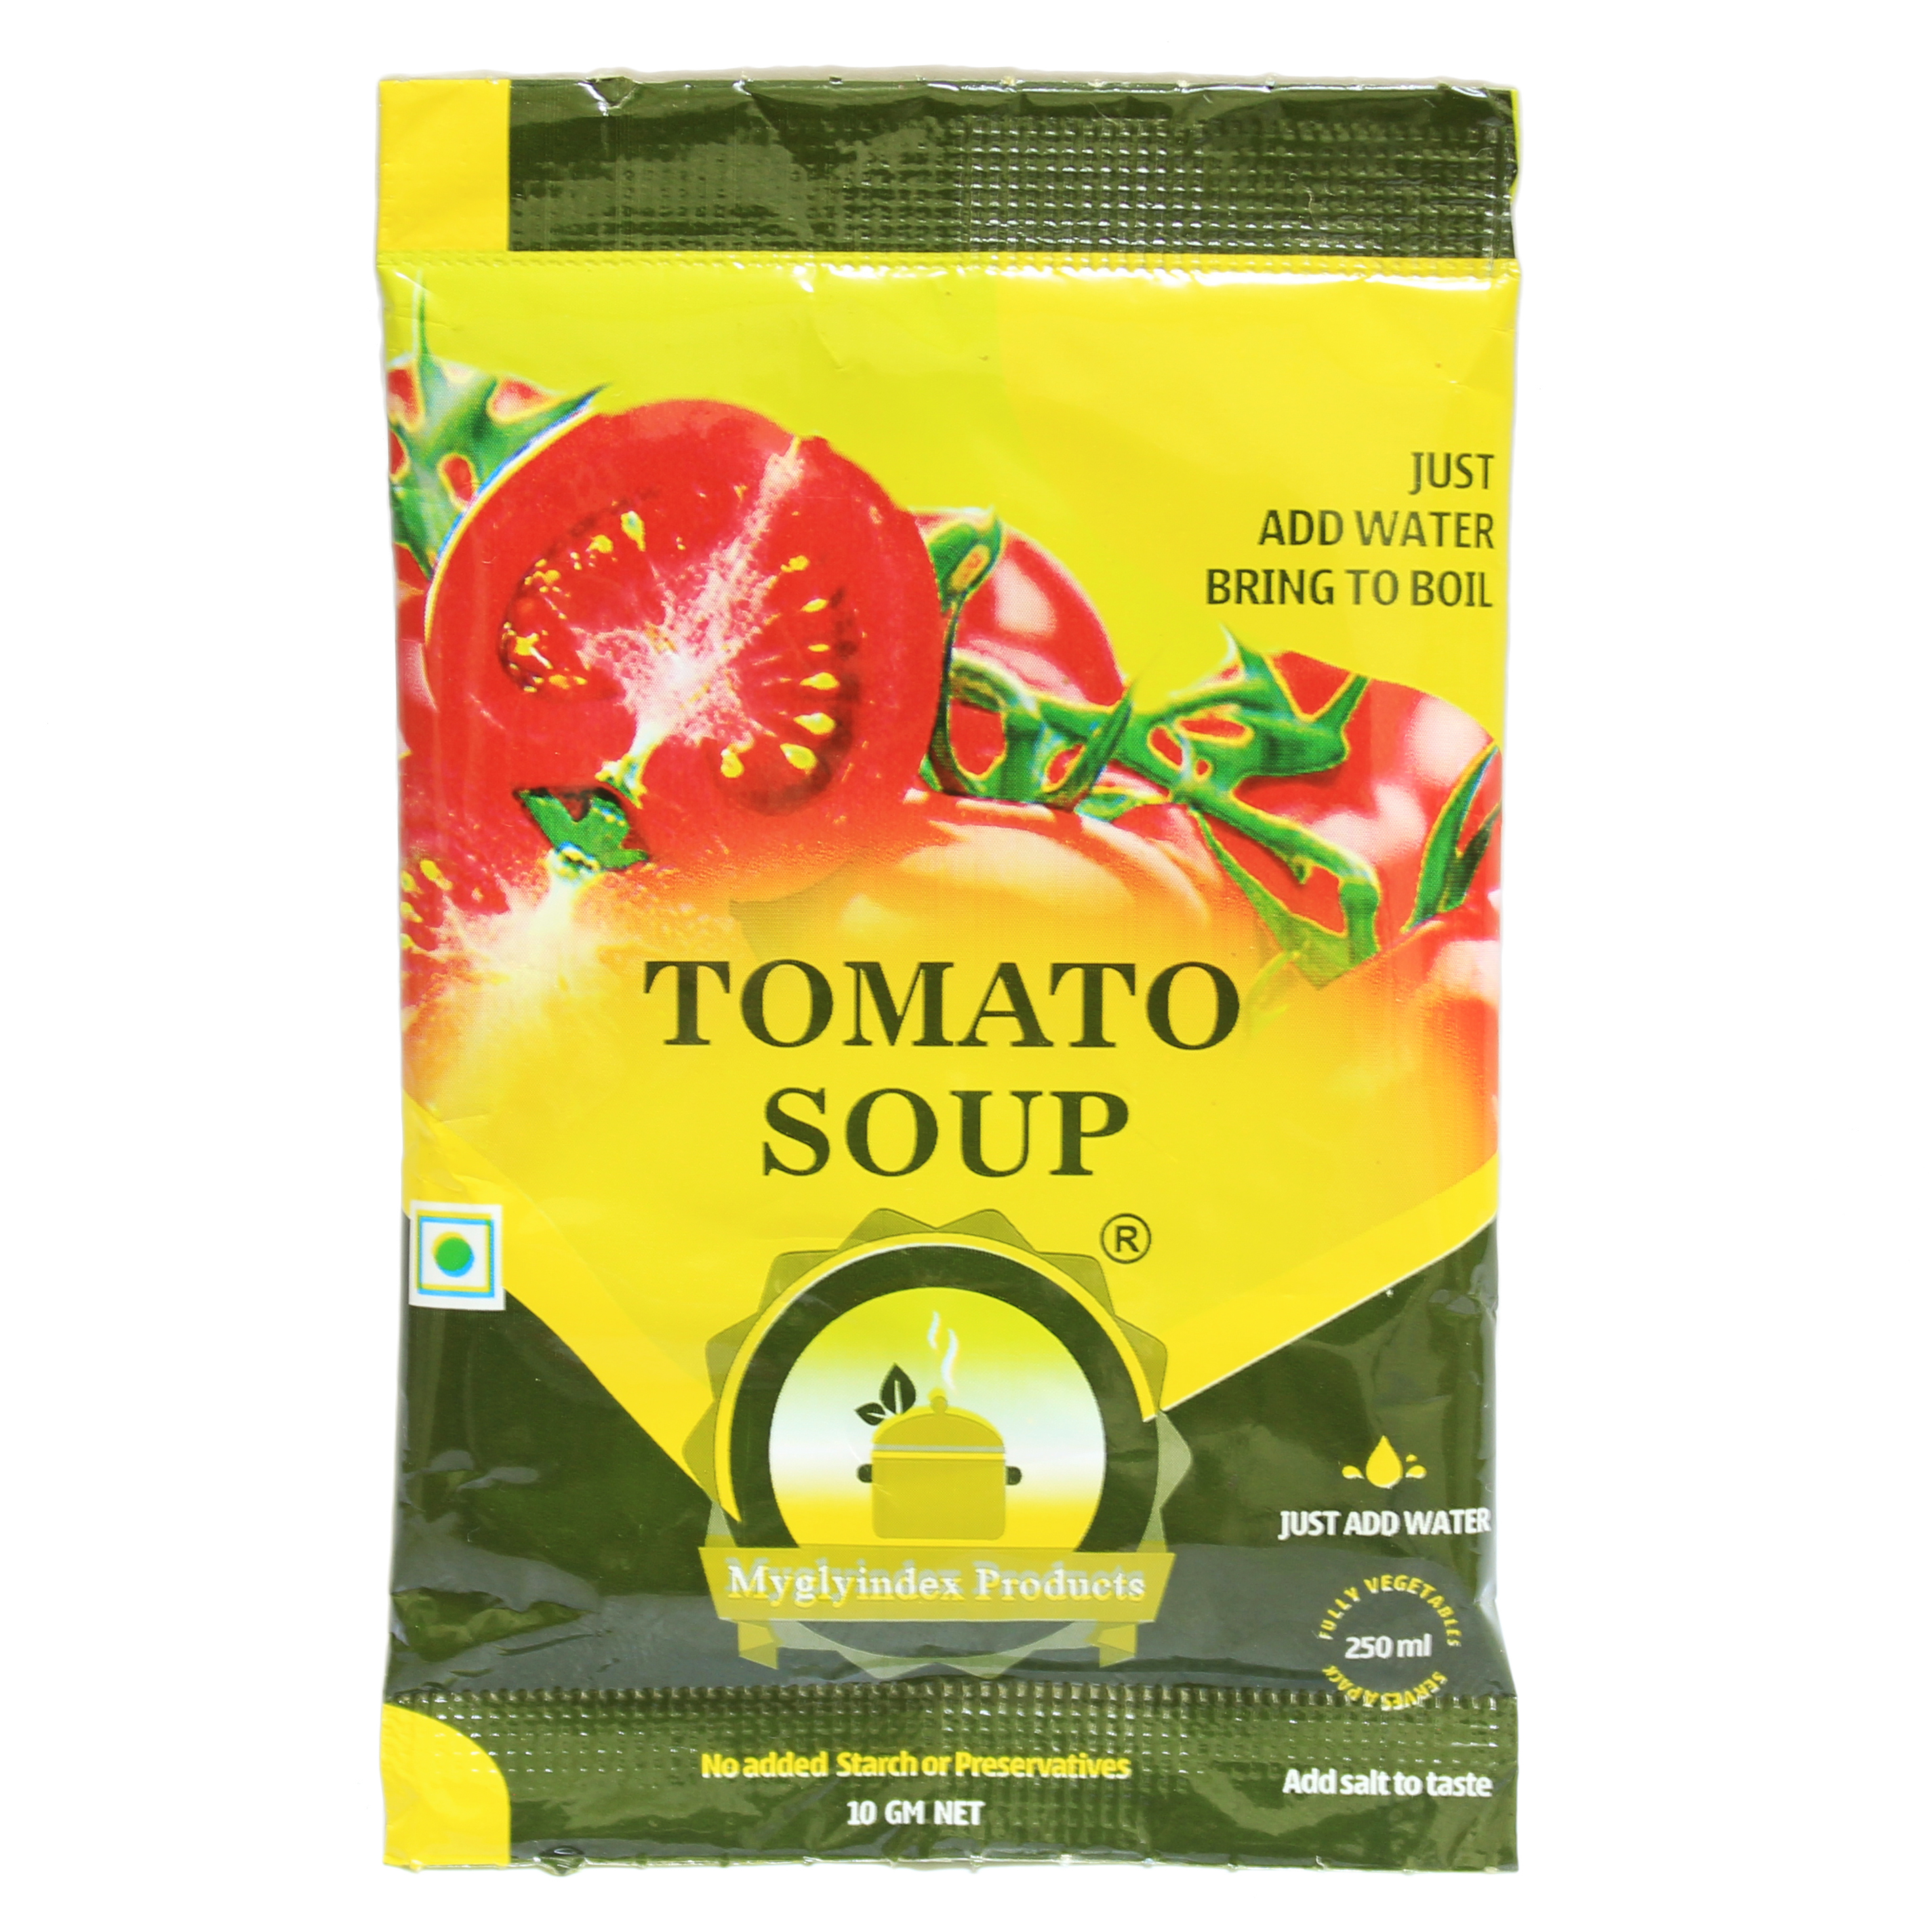 Buy Myglyindex Tomato Soup (10 Sachets) at Best Price Online